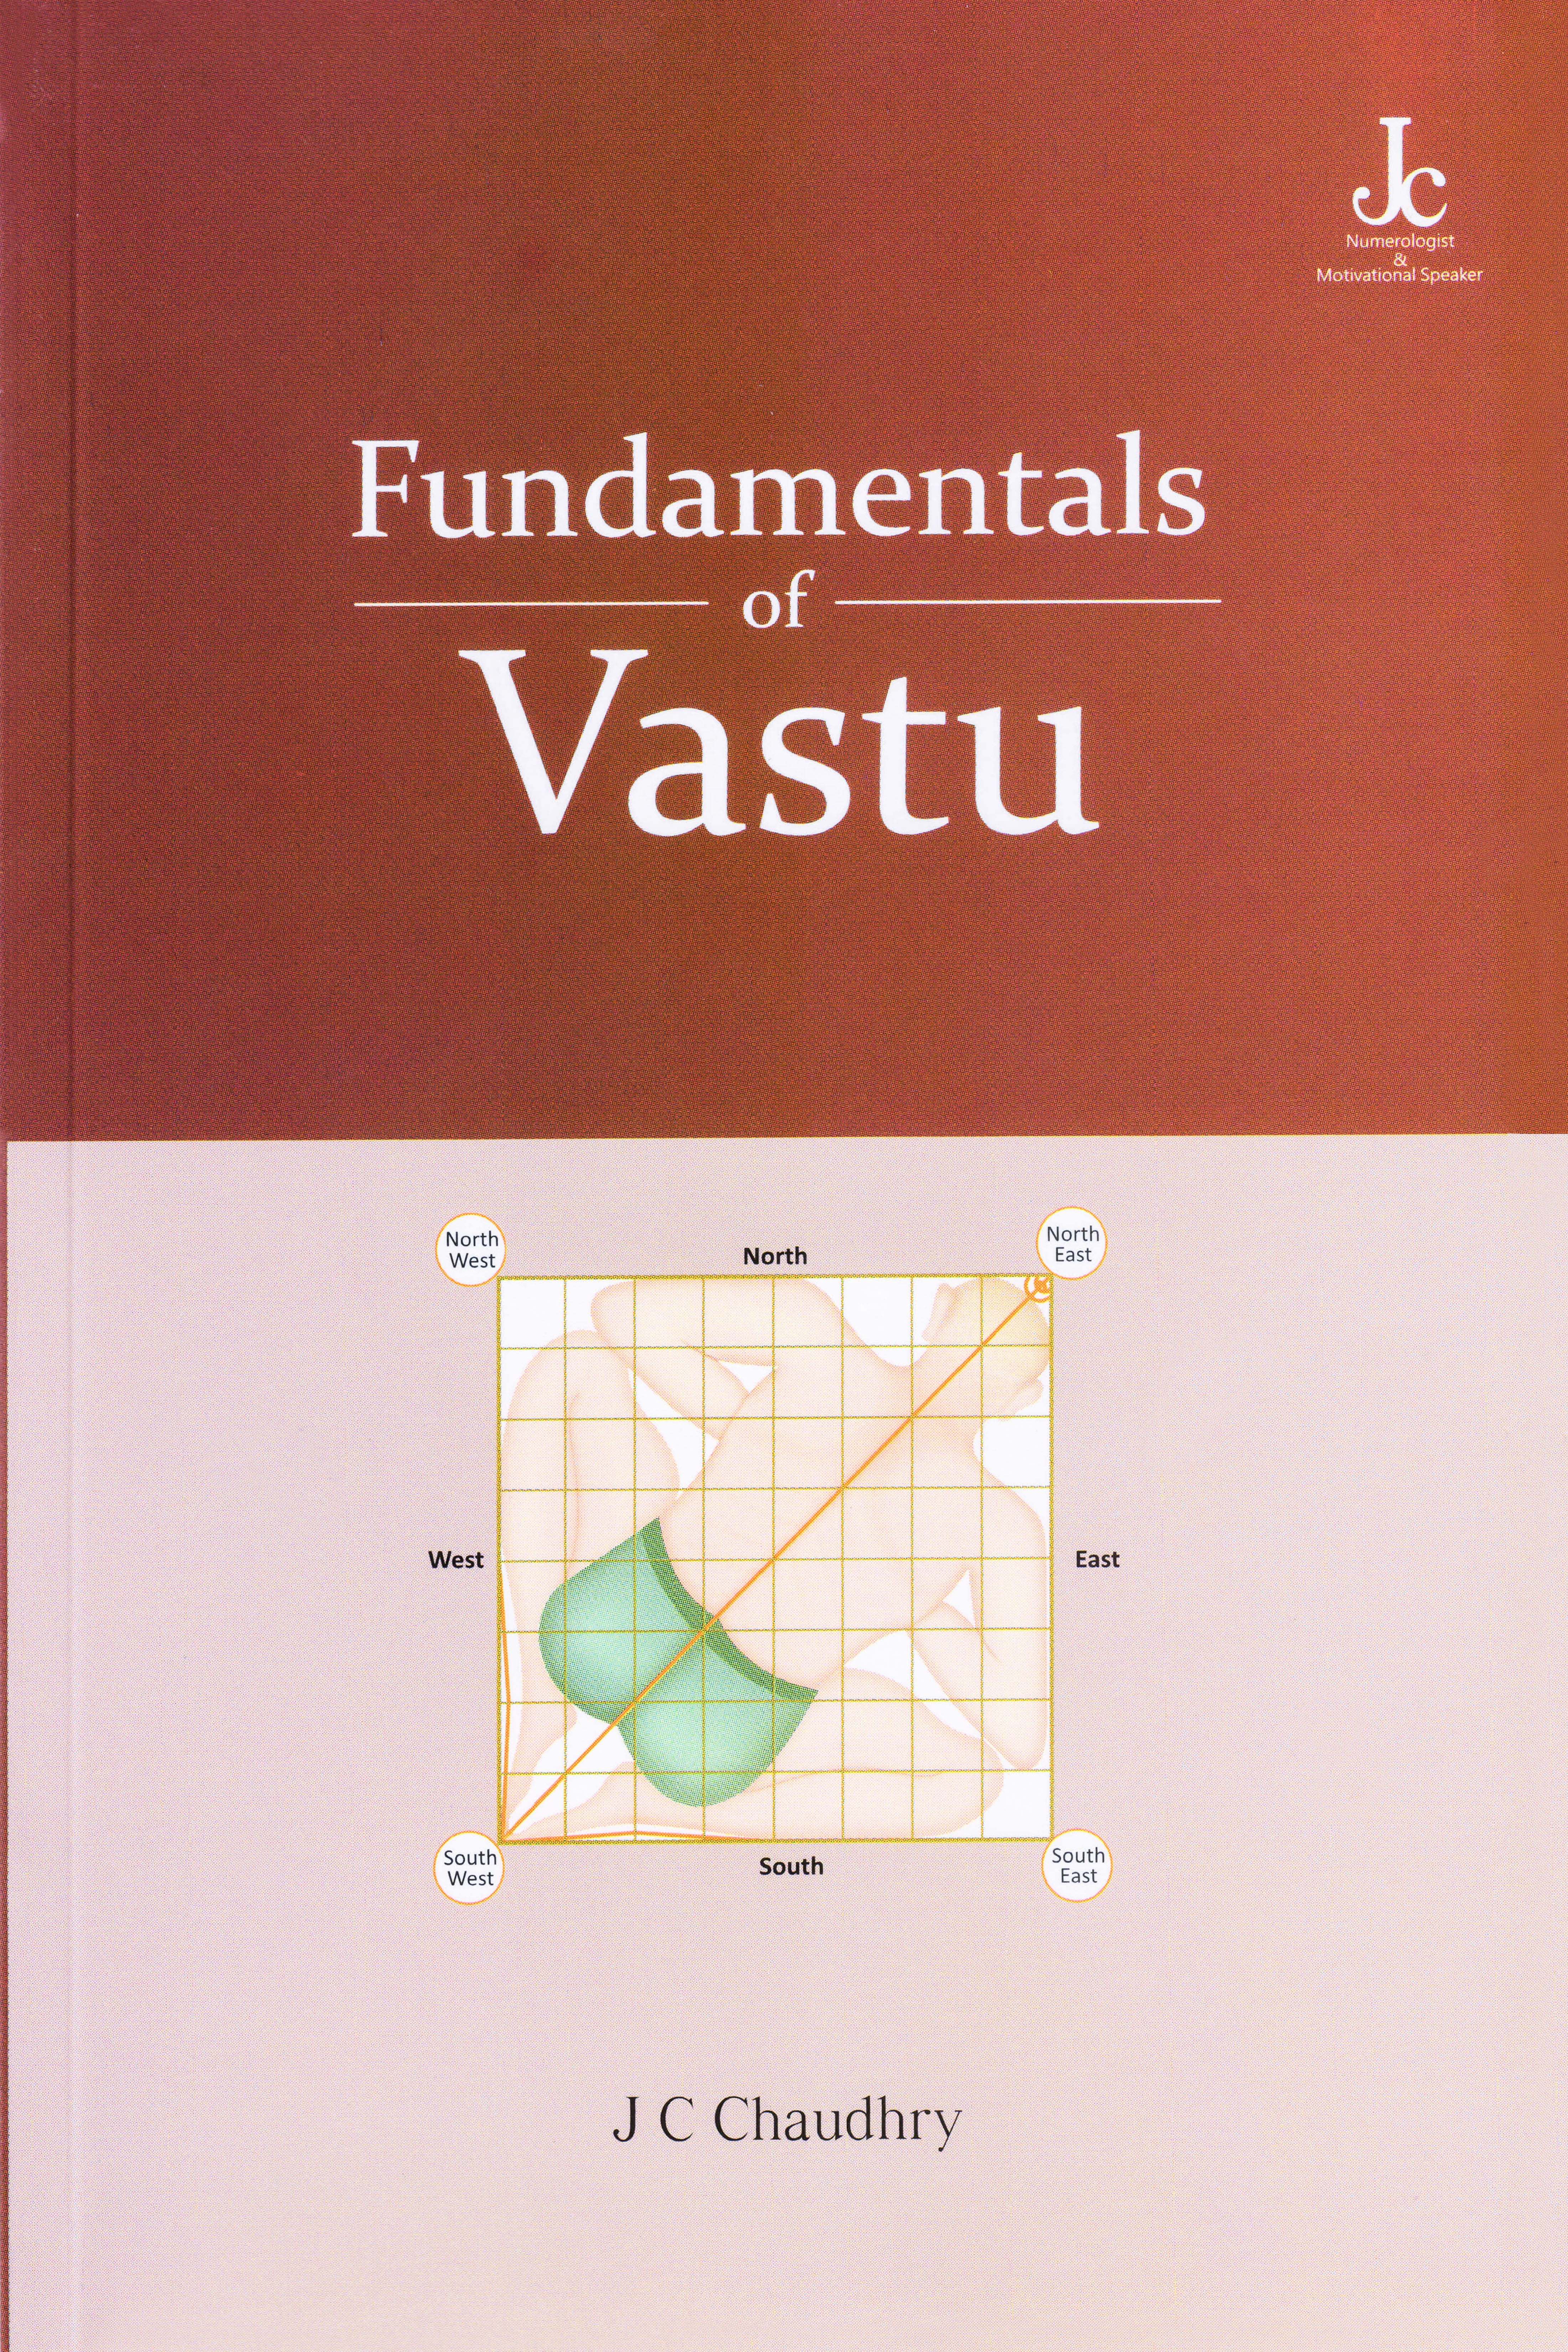 Fundamentals of Vastu book by J C Chaudhry